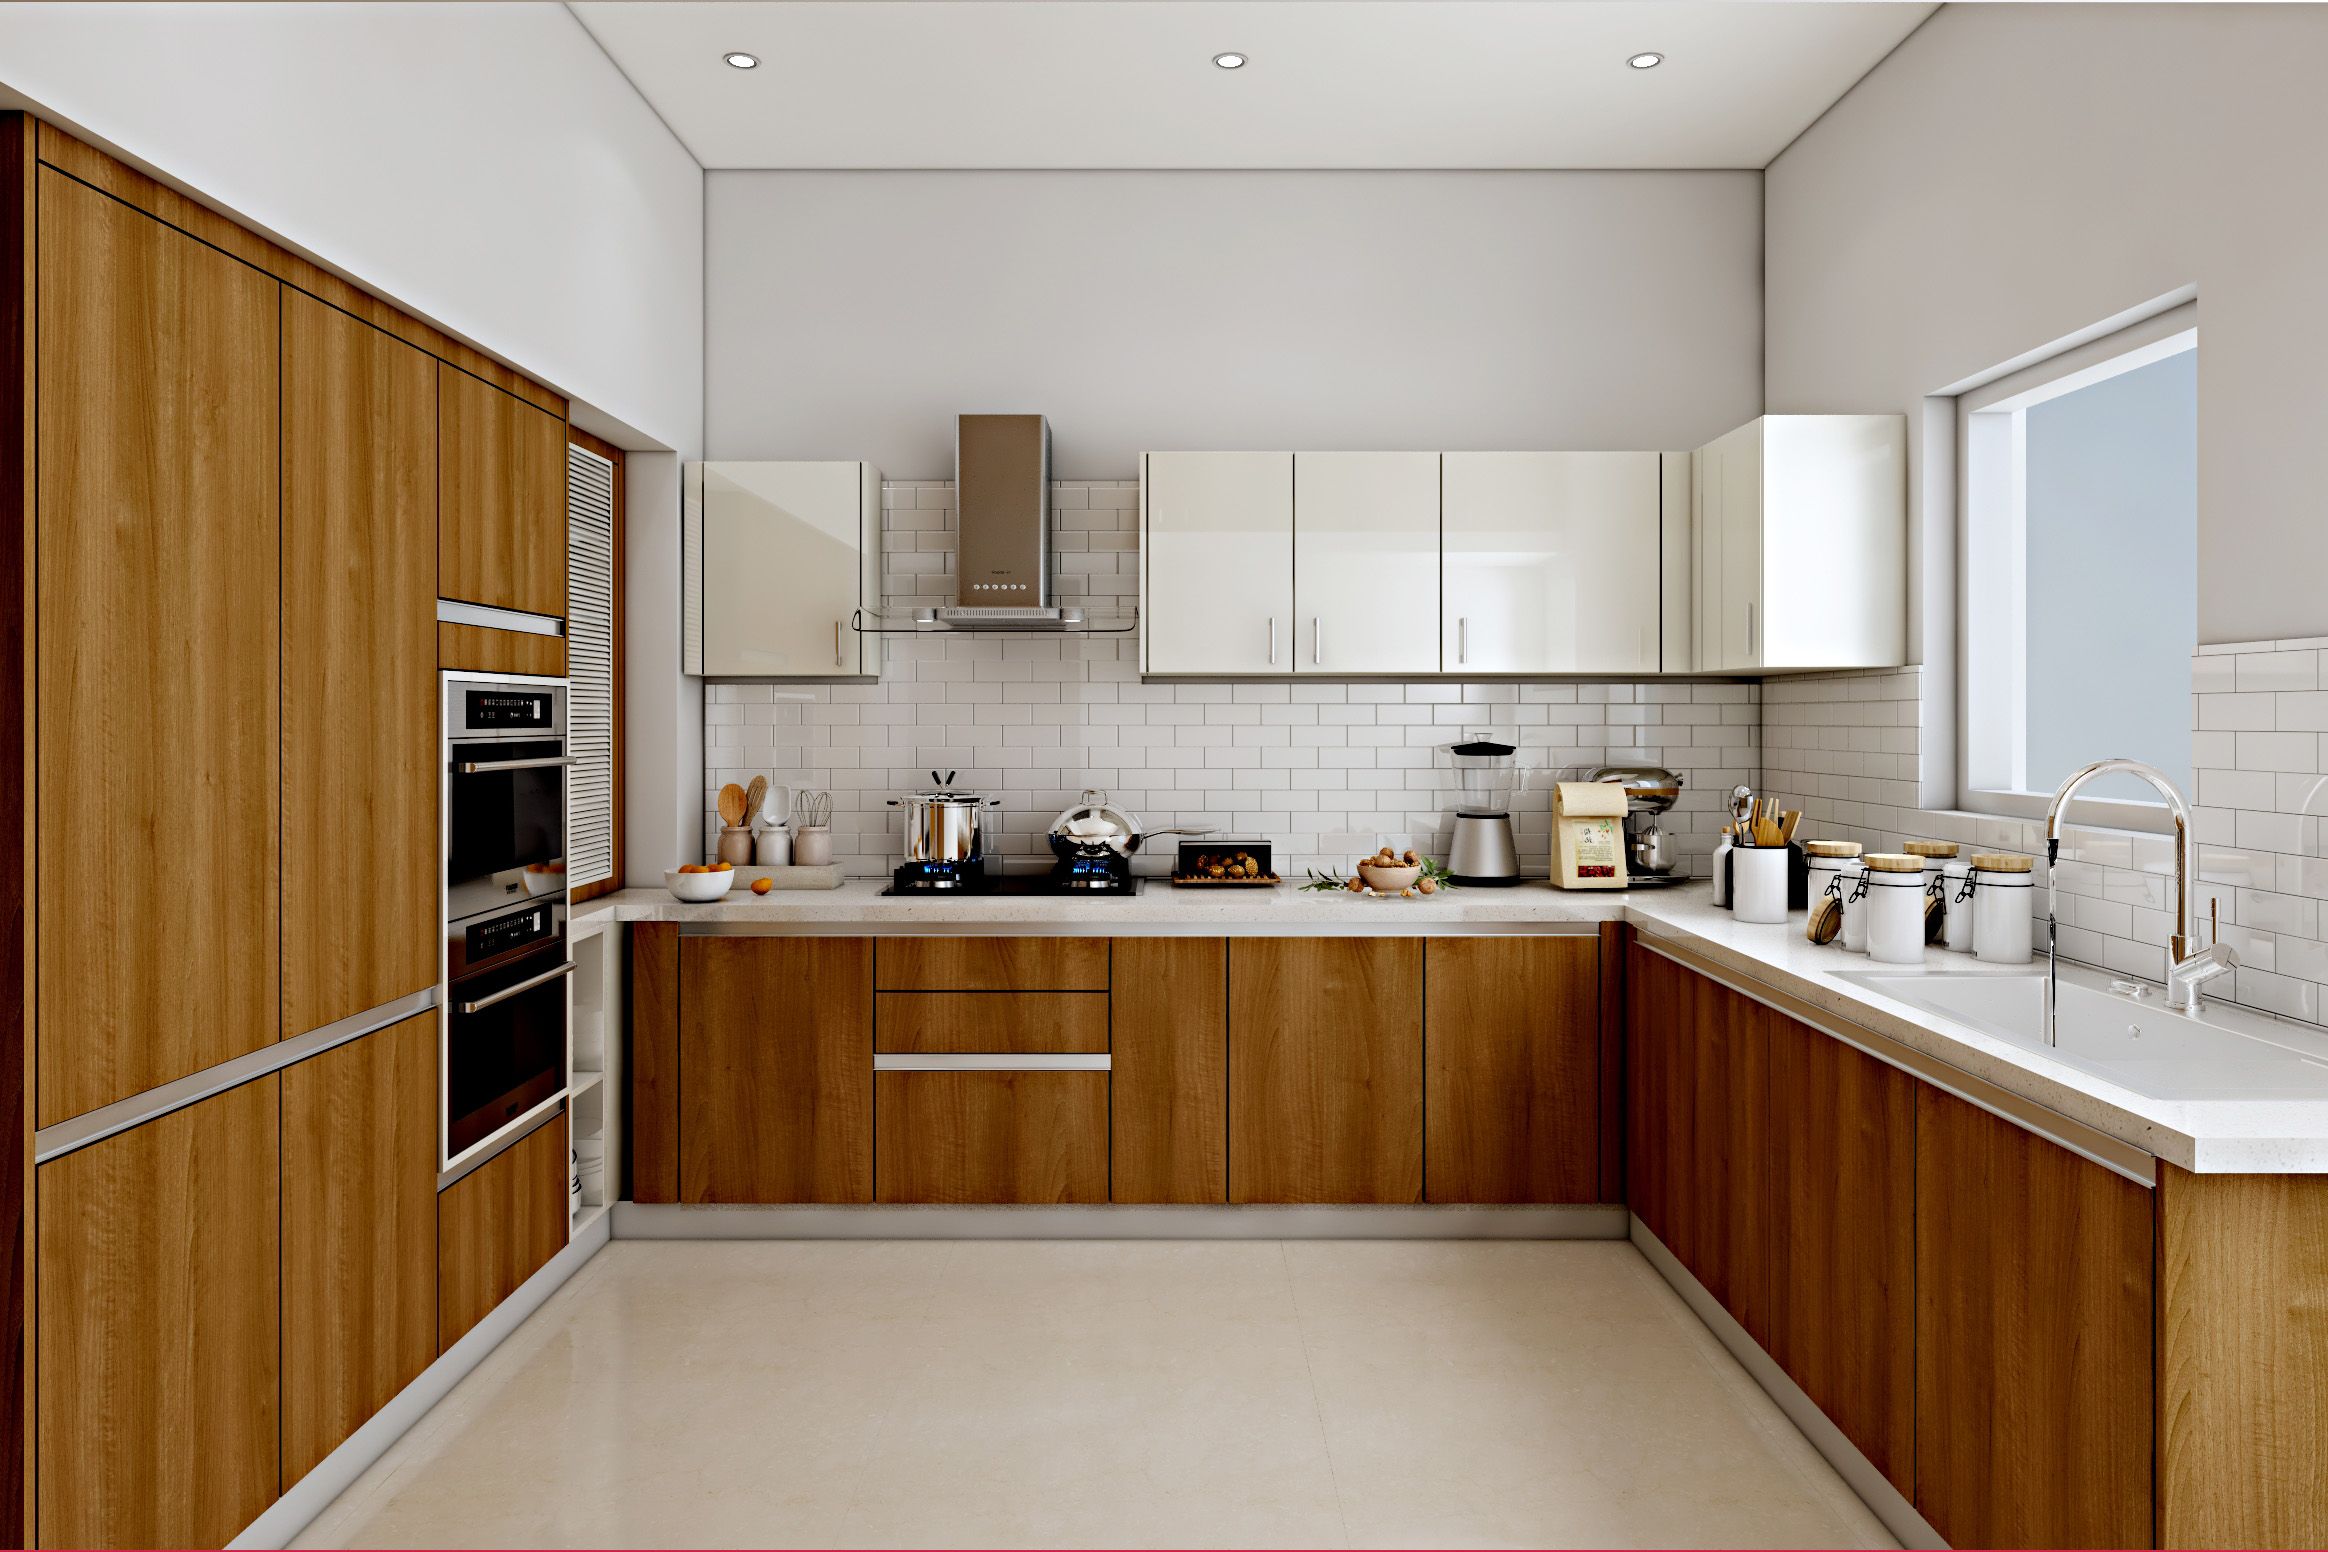 Classic Wood And White U-Shaped Modular Kitchen Design With White Brick Backsplash